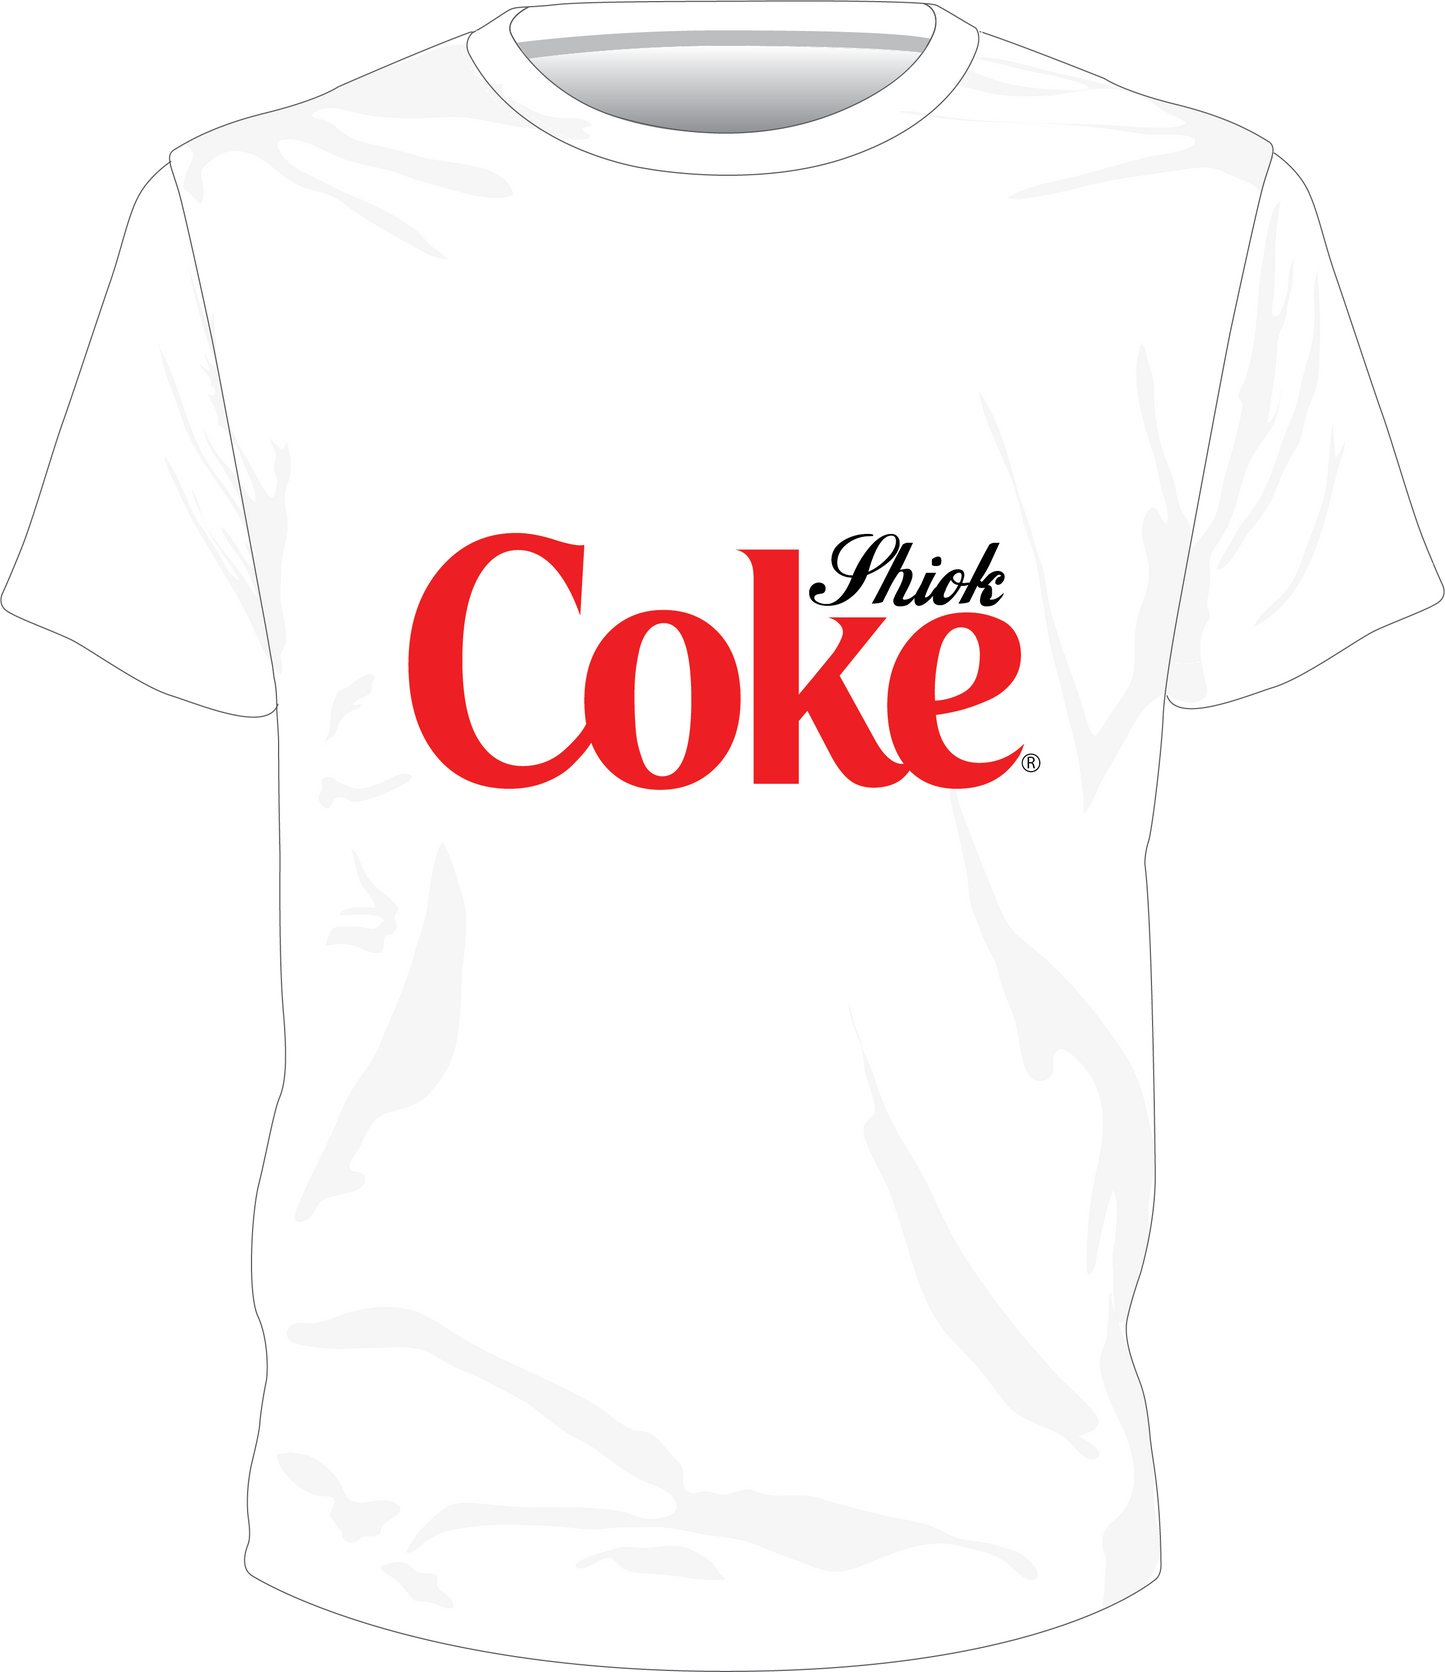 Shiok Coke